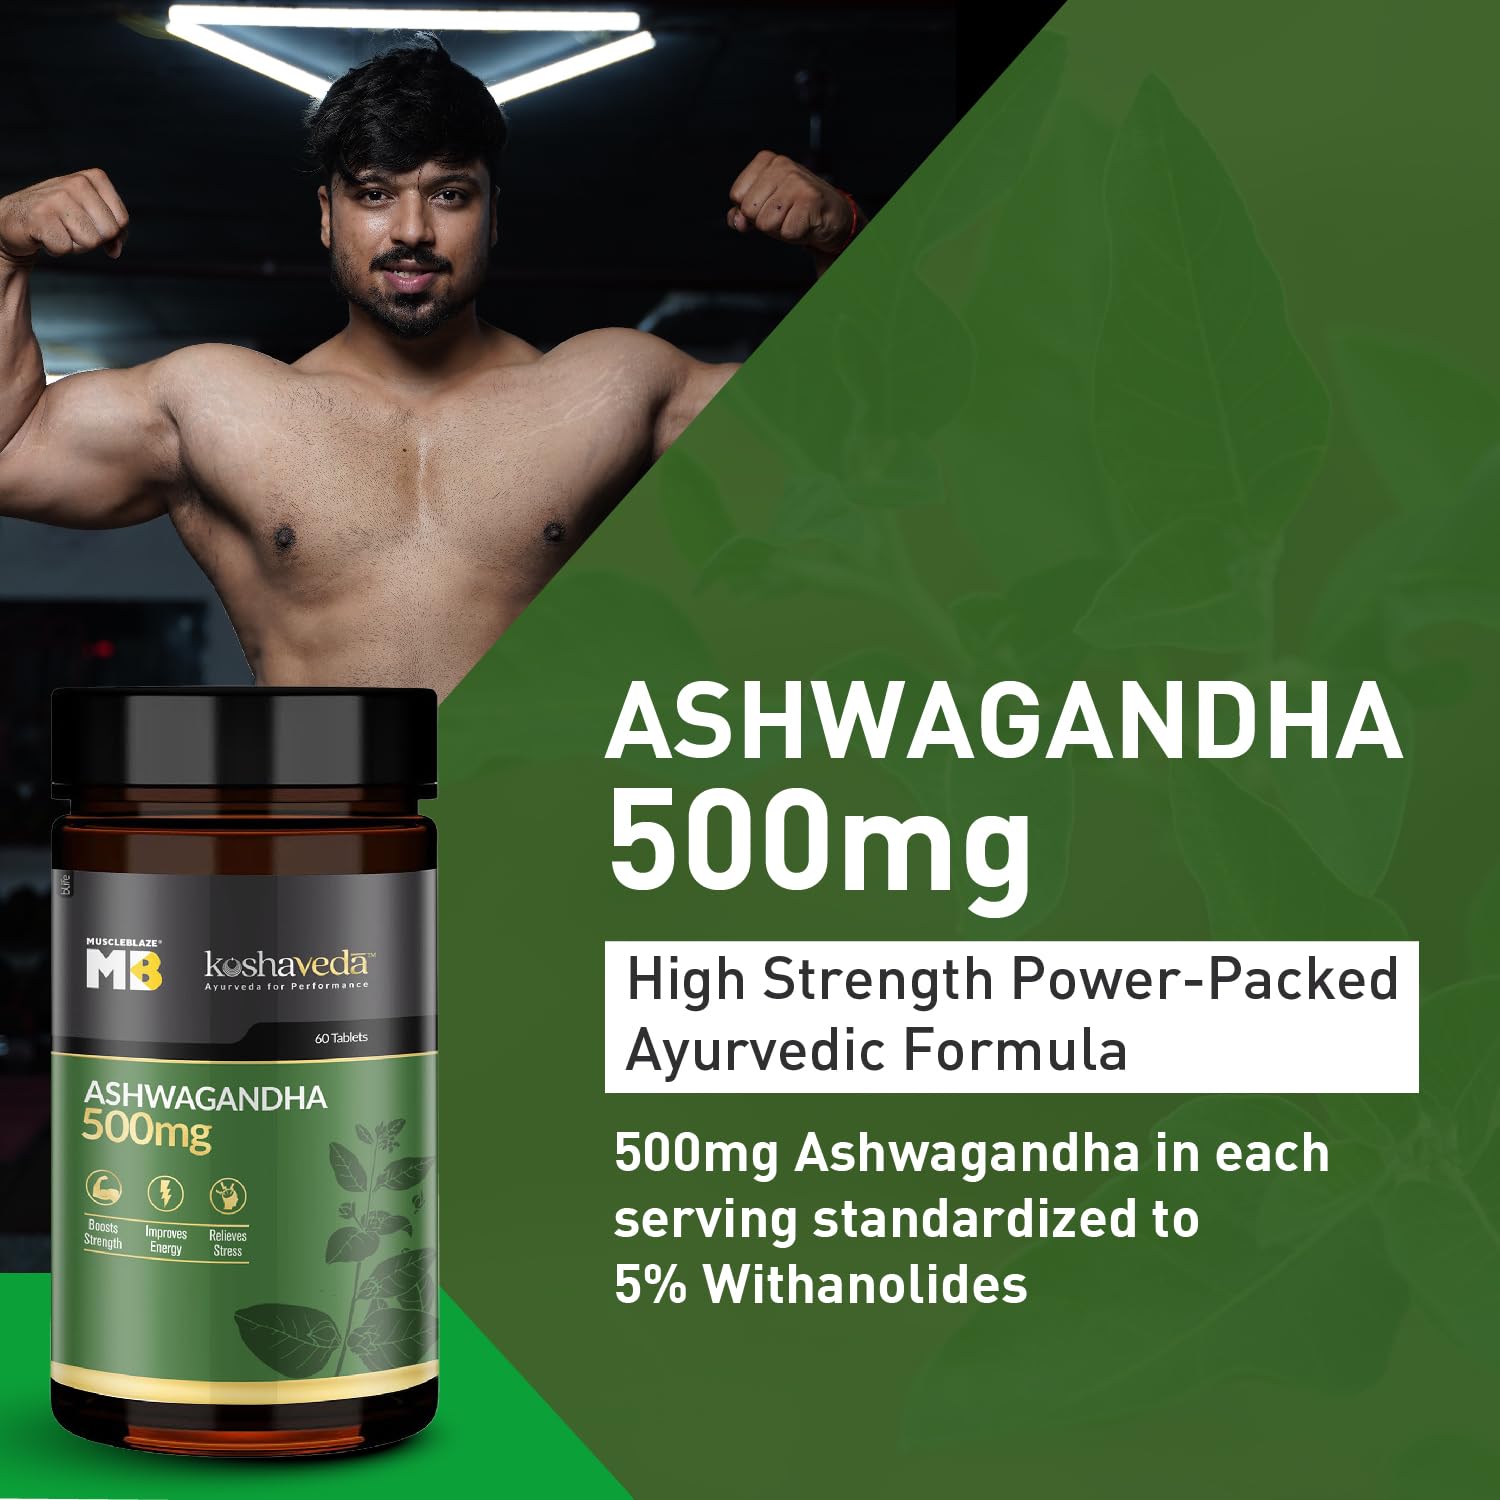 MuscleBlaze Koshaveda - Ashwagandha 500mg, 30 tablet(s) - Health Core India